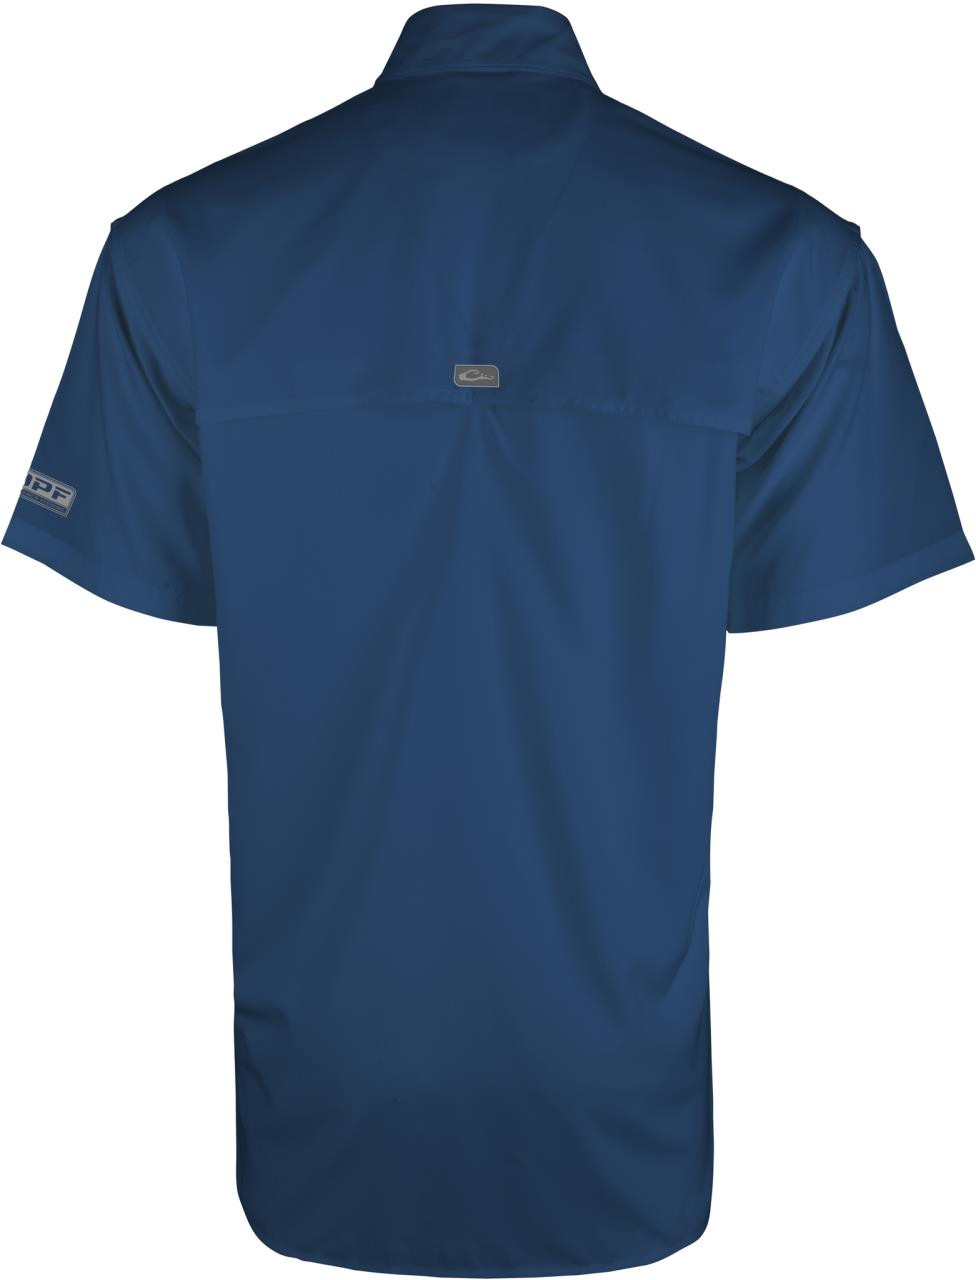 Smith's Workwear Short Sleeve Performance Fishing Shirt, Captain Blue